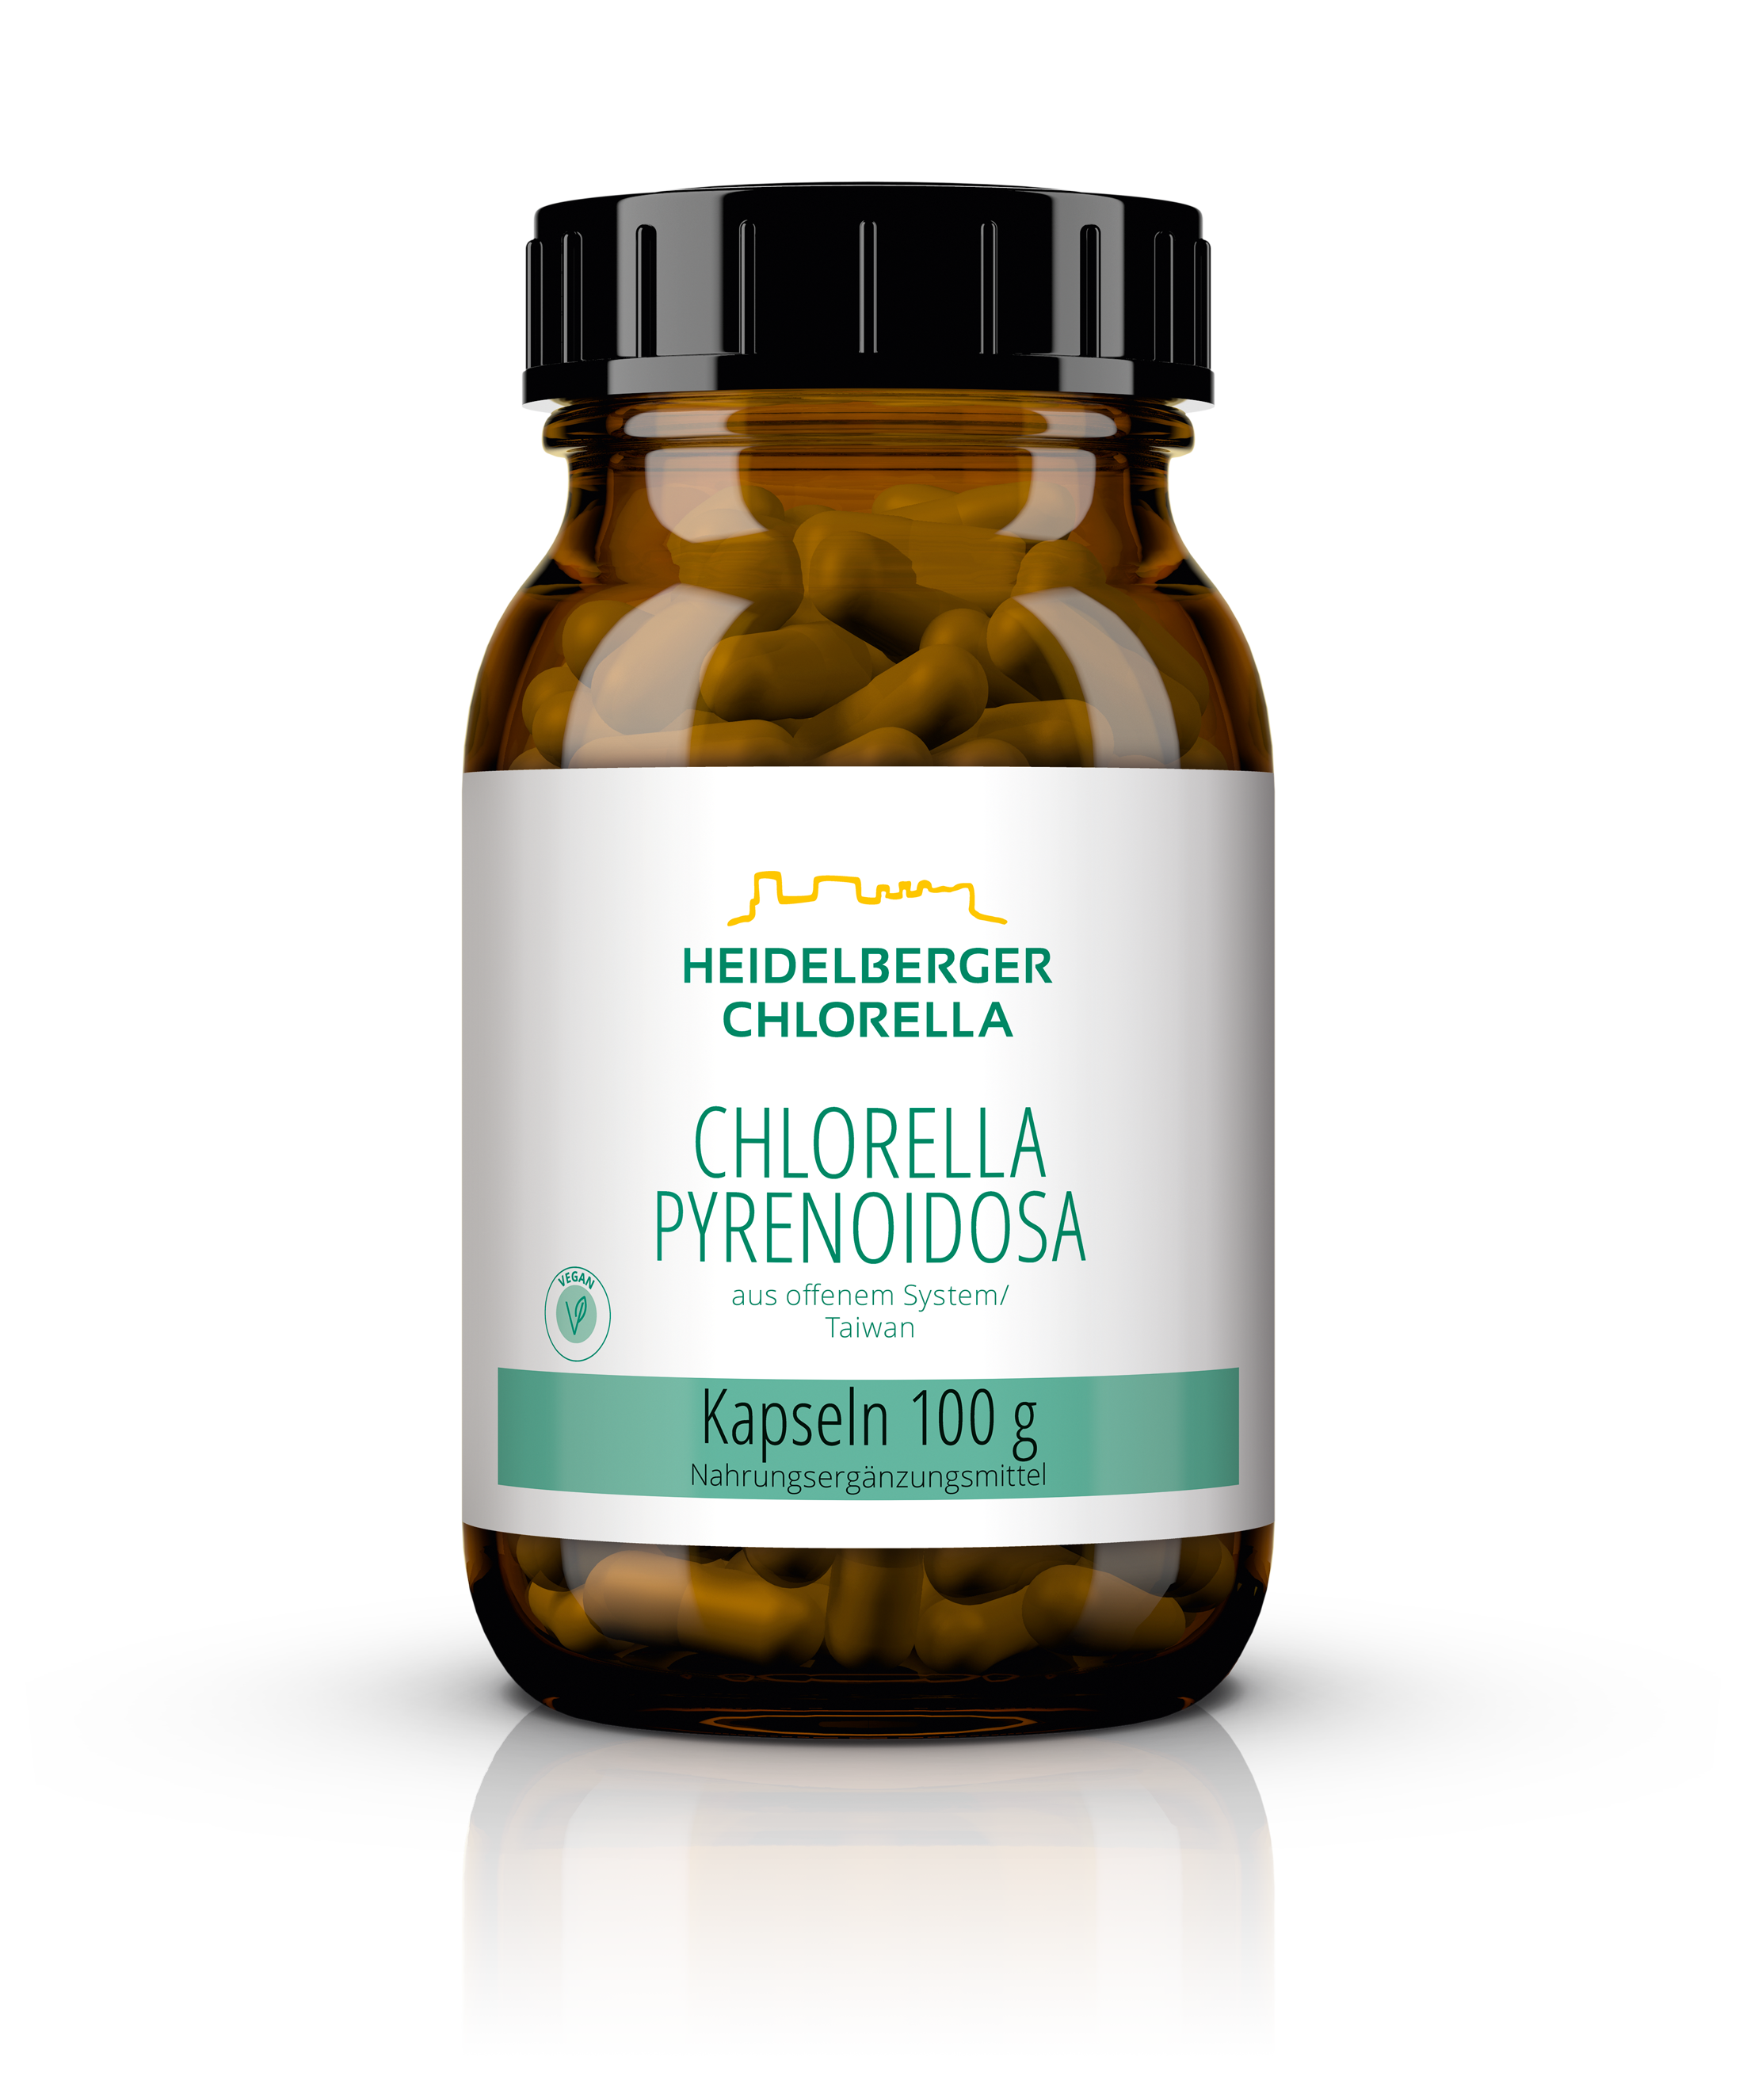 Chlorella pyrenoidosa kaufen | Heidelberger Chlorella